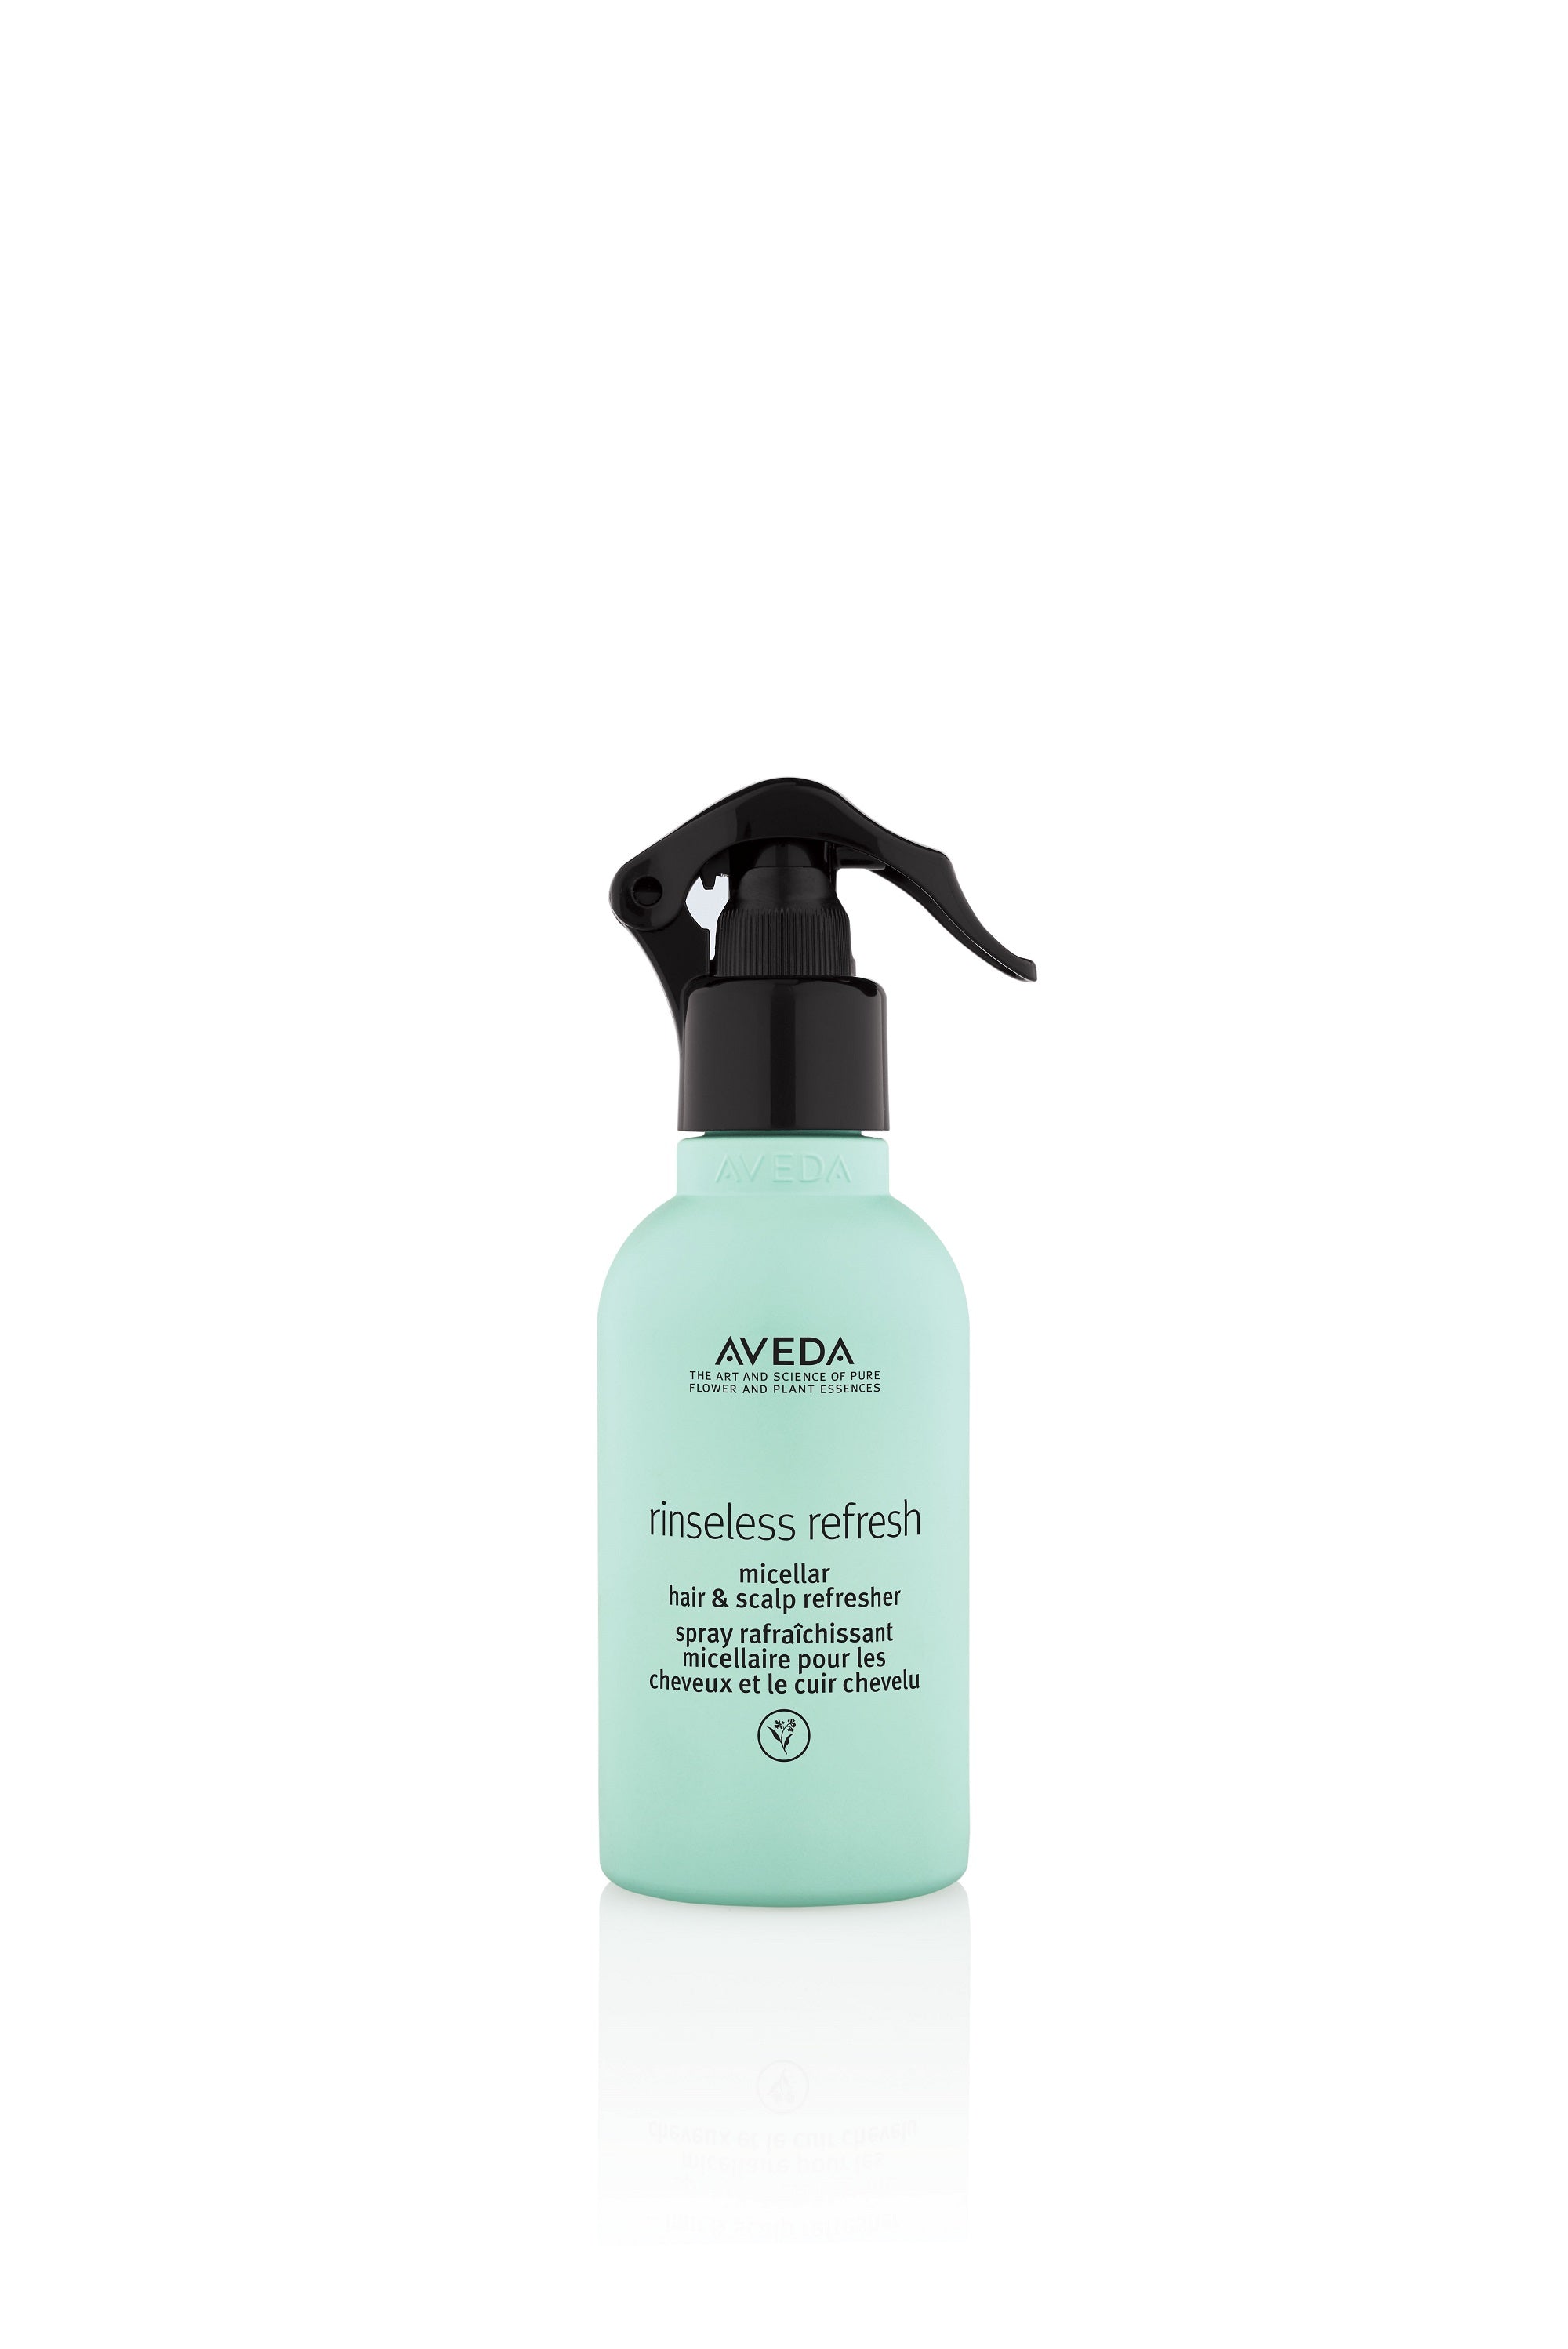 AVEDA rinseless refresh™ micellar hair & scalp refresher